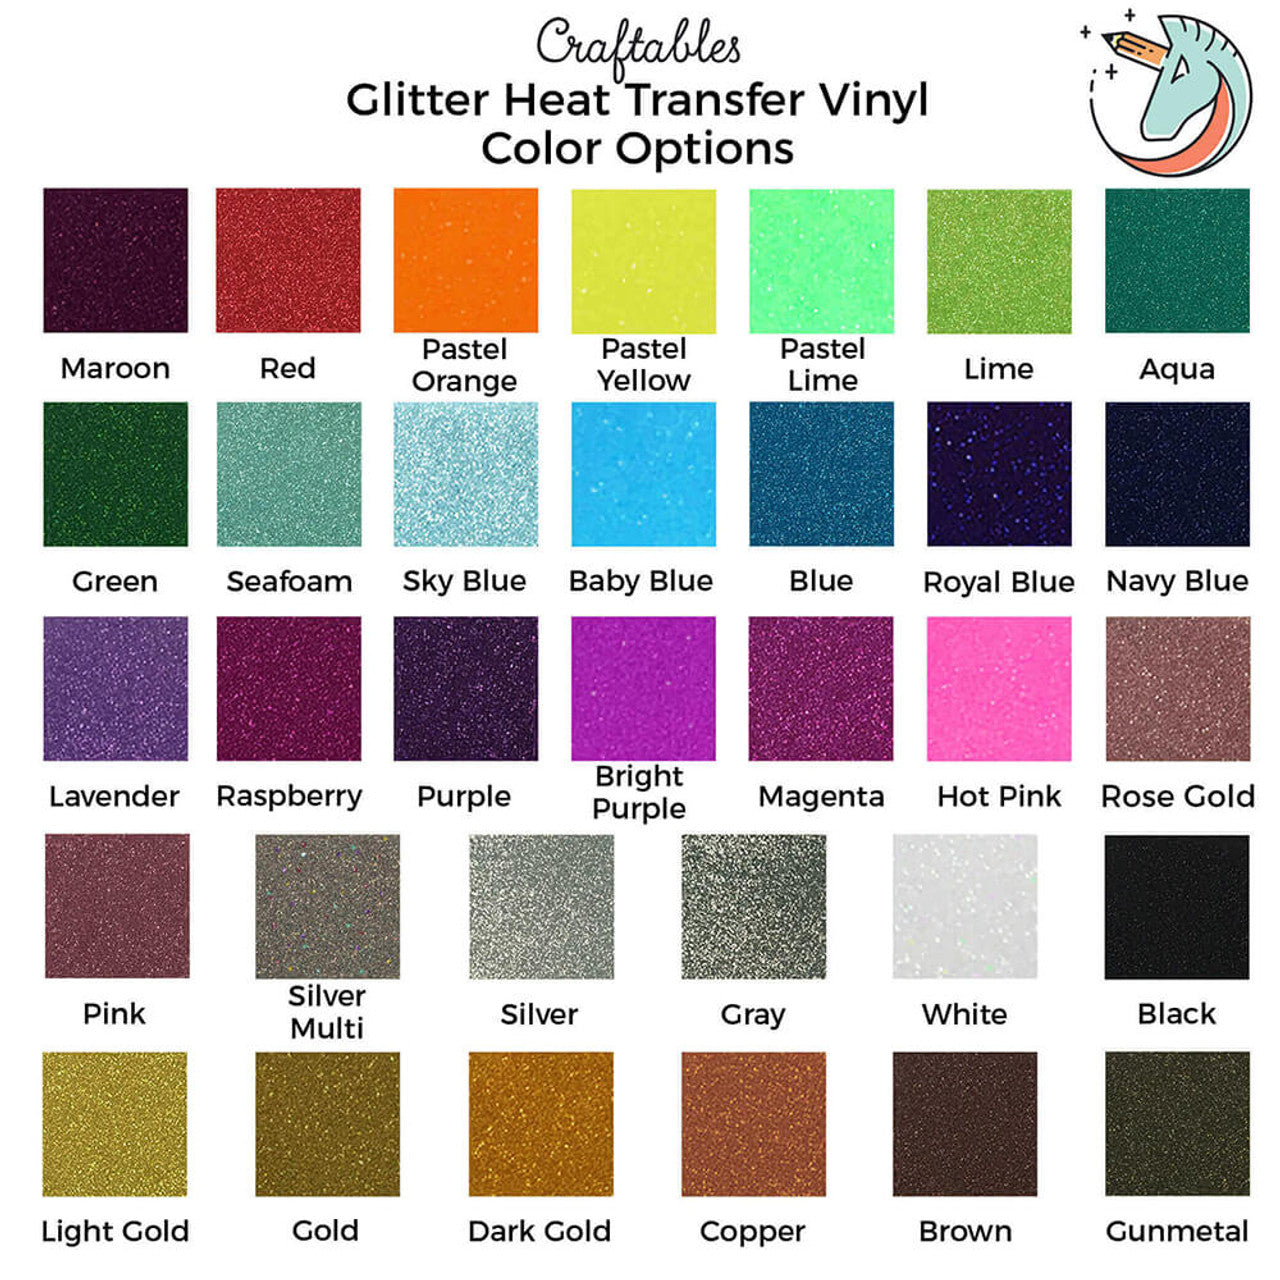 Raspberry Glitter Heat Transfer Vinyl Sheets By Craftables